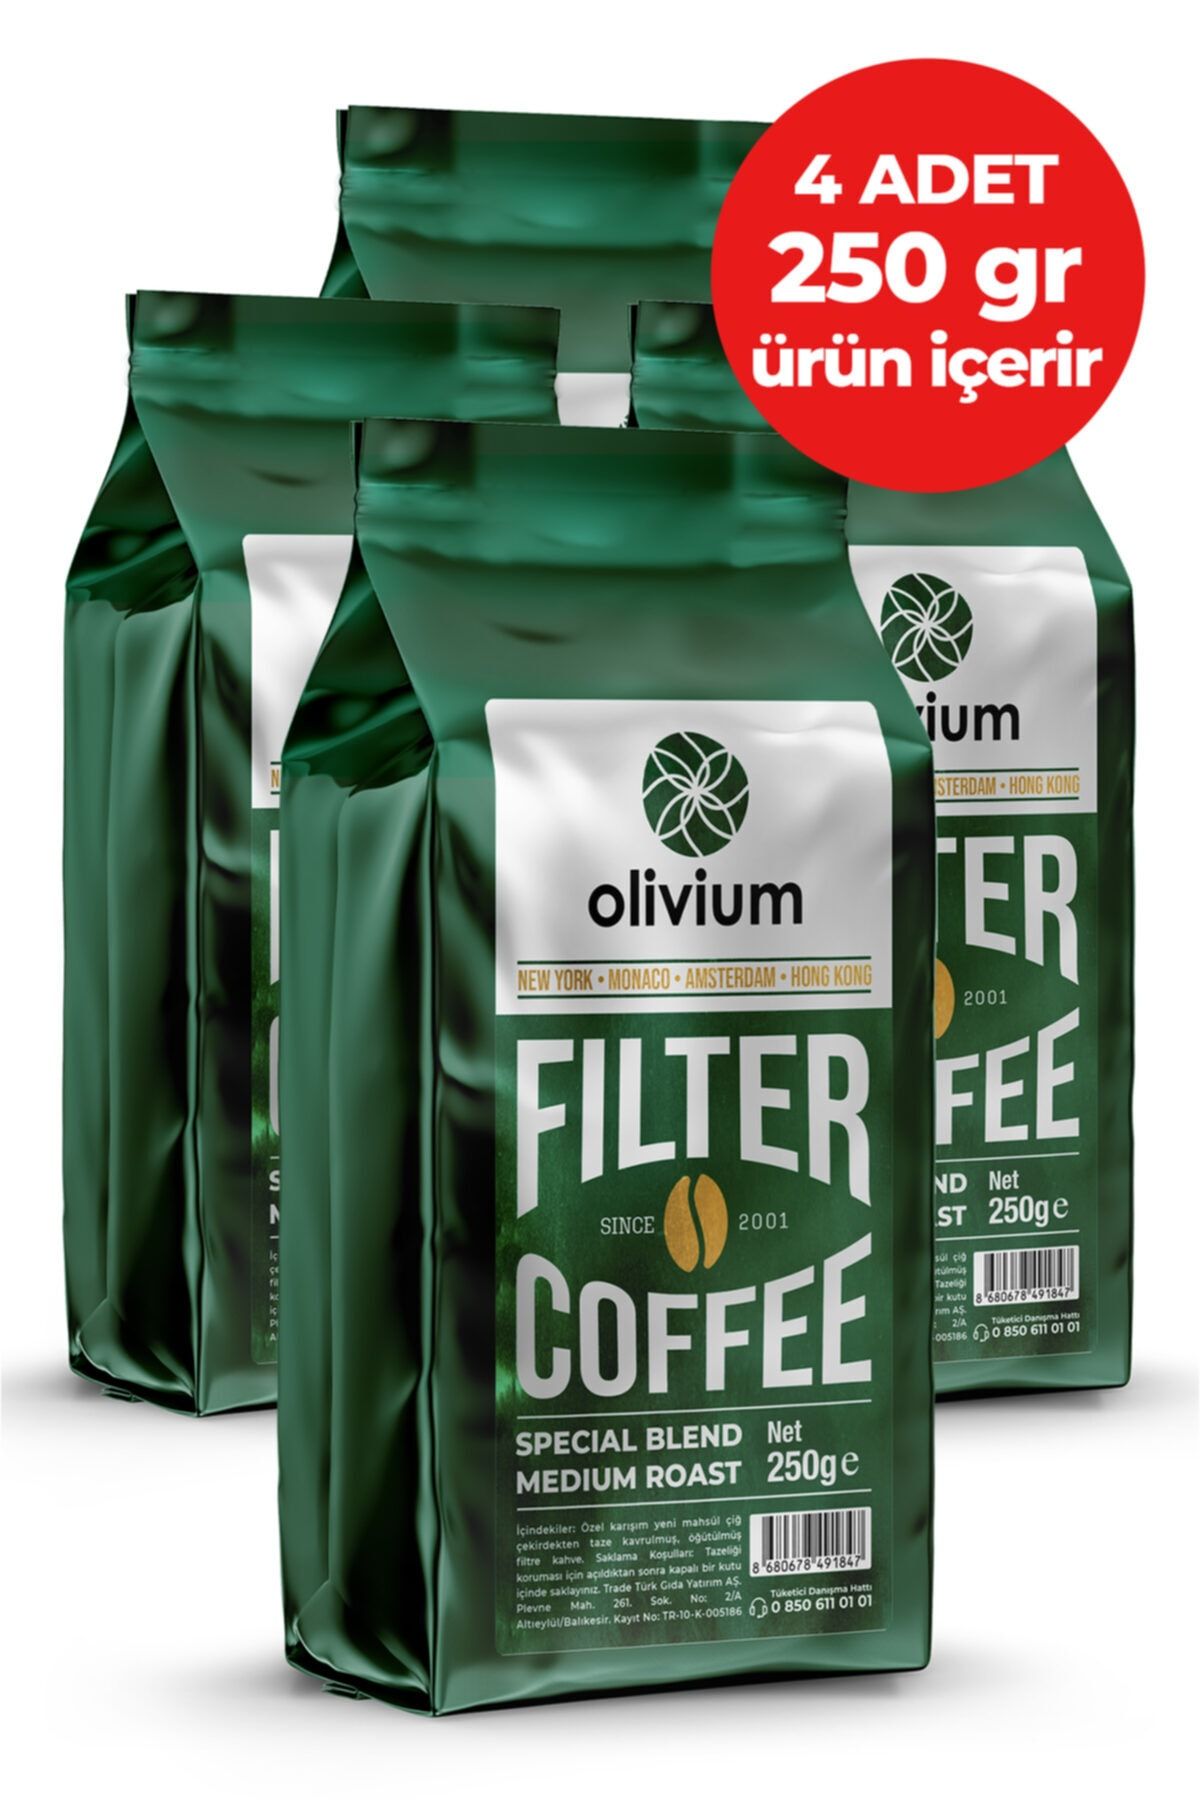 Olivium 4 Paket 250 Gramlık Öğütülmüş Filtre Kahve ( 4 Adet 250 Gramlık Ürün Içerir)